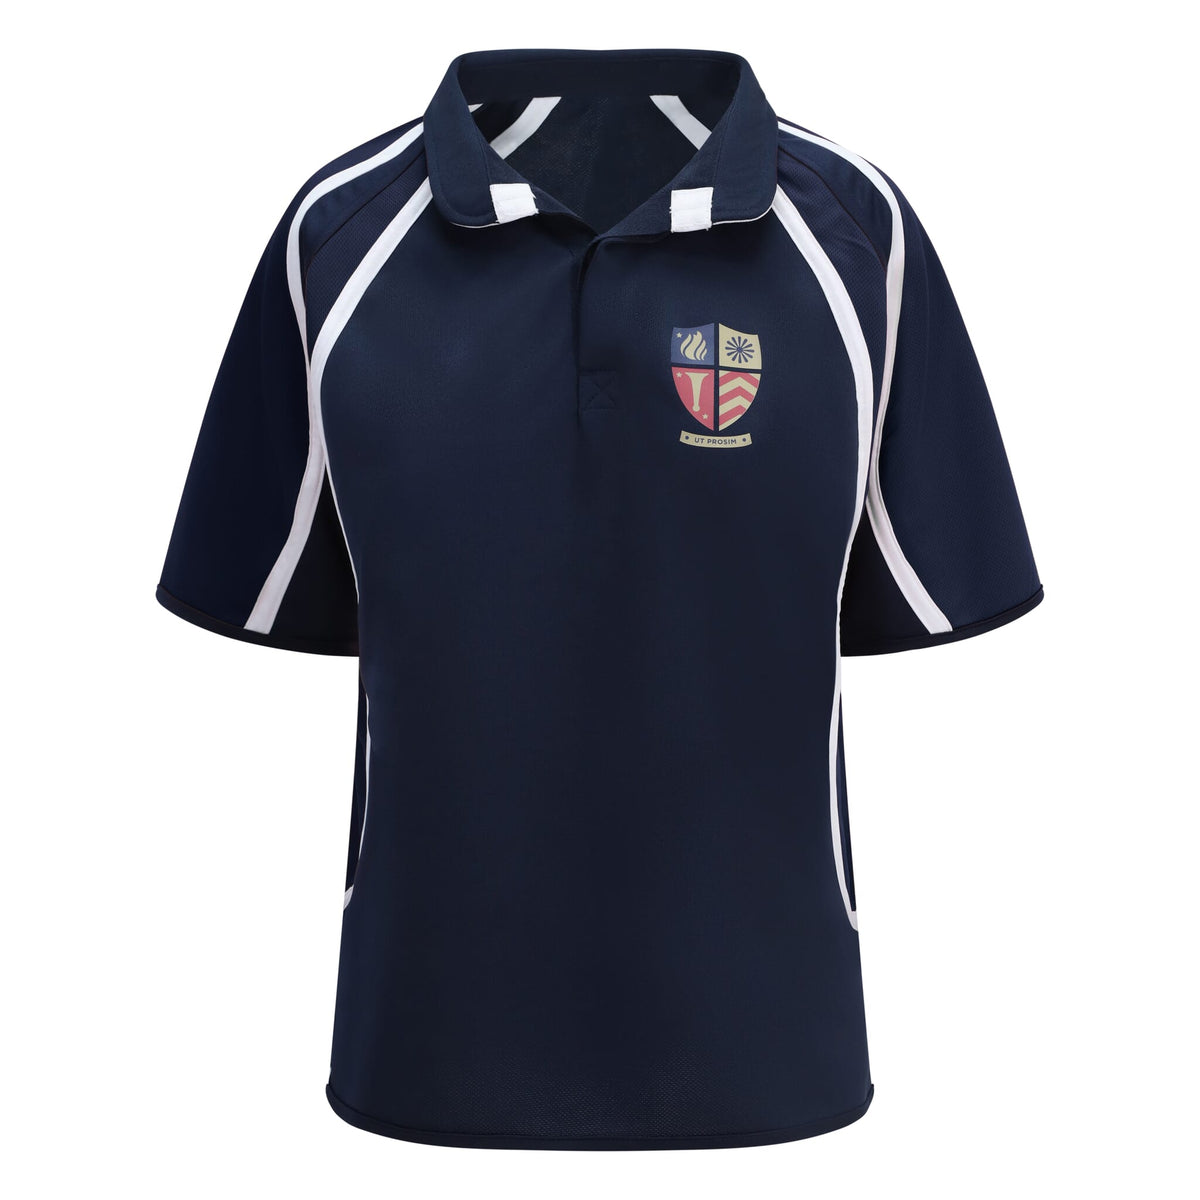 Ryde School Rugby Shirt